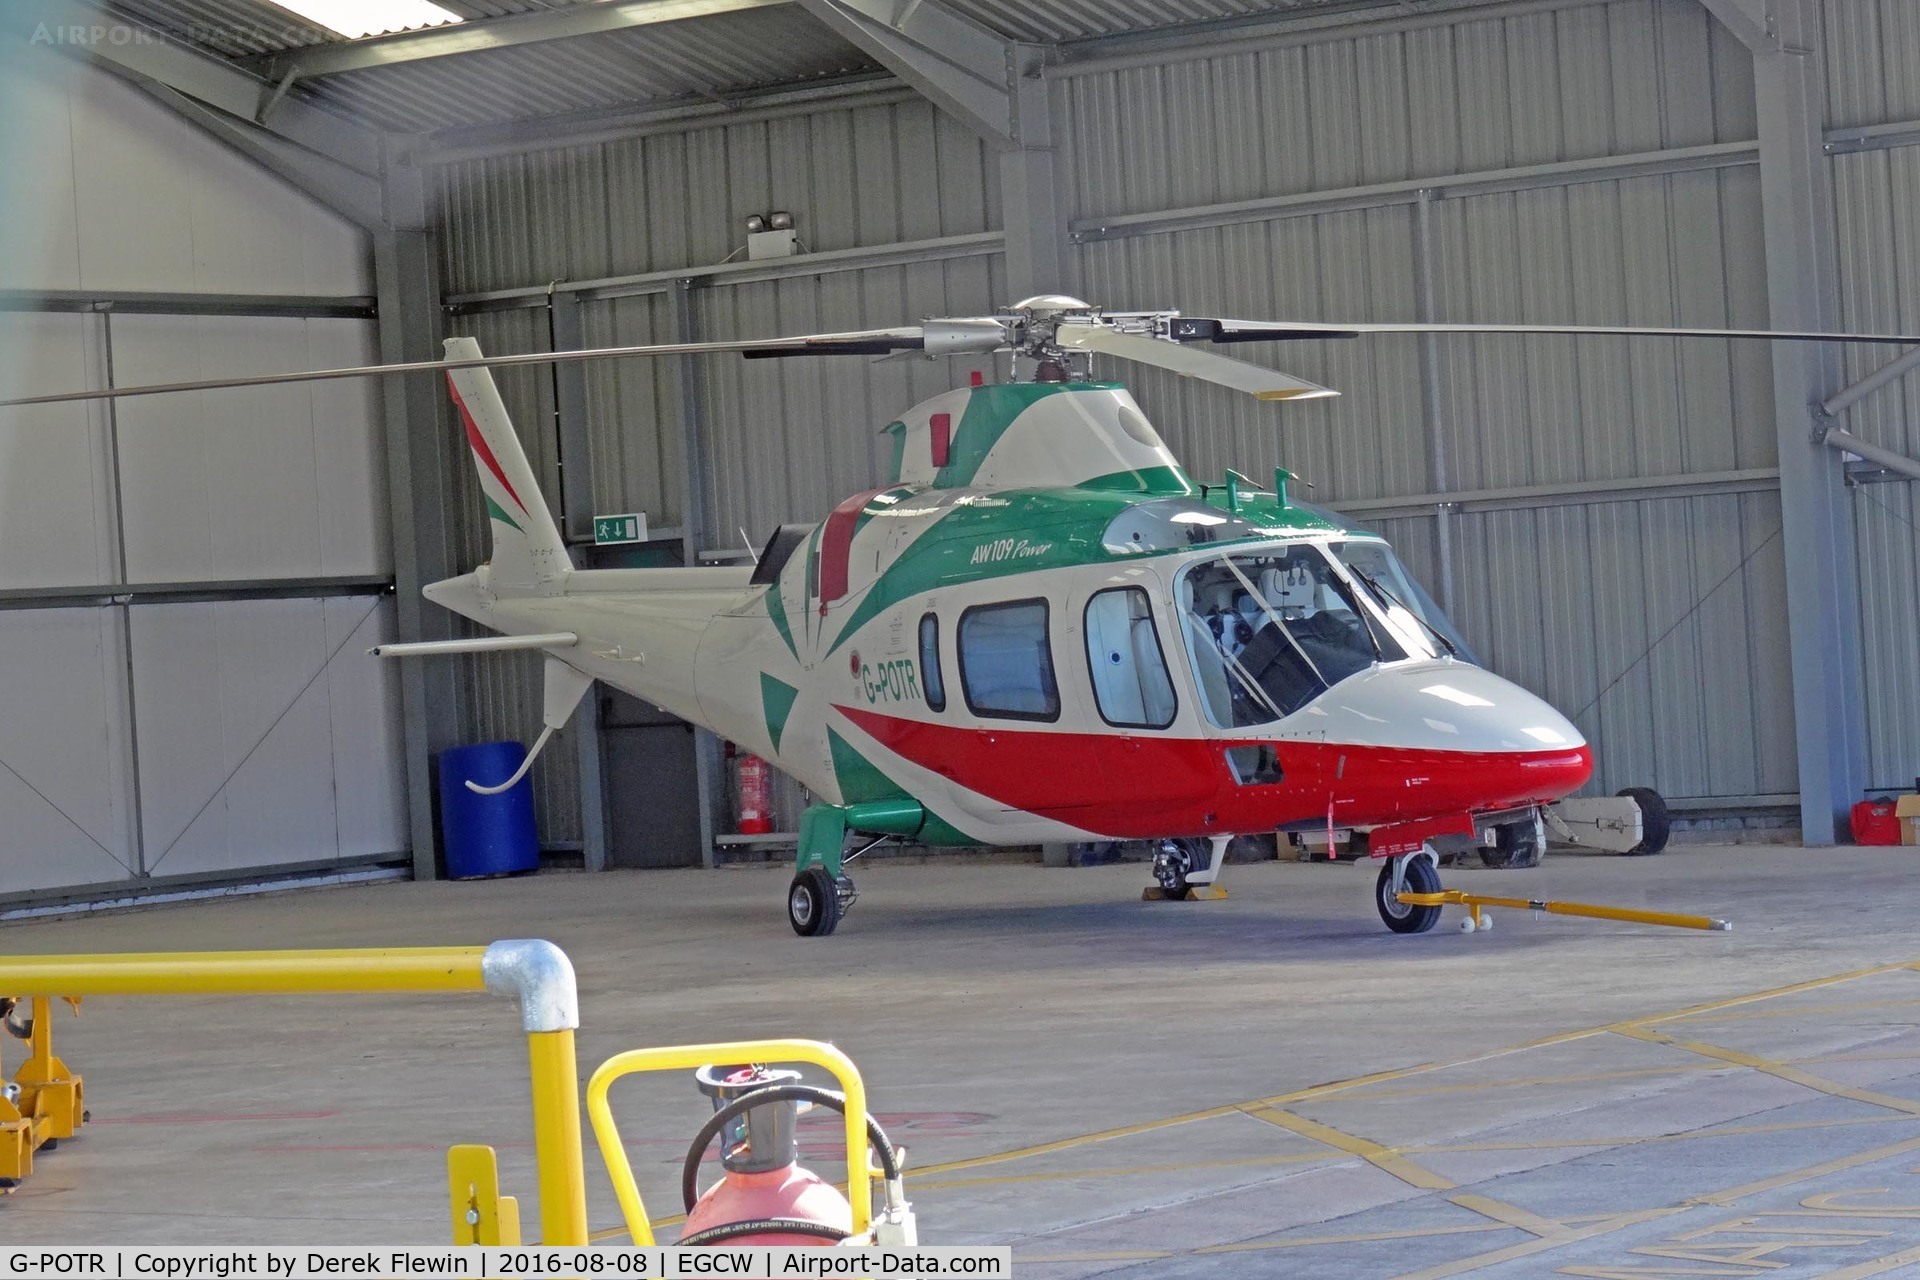 G-POTR, 1999 Agusta A-109E Power C/N 11043, A-109E Power, Sundorne Products Ltd Welshpool based, previously N109GR, N195NJ, G-OFTC, seen hangared.